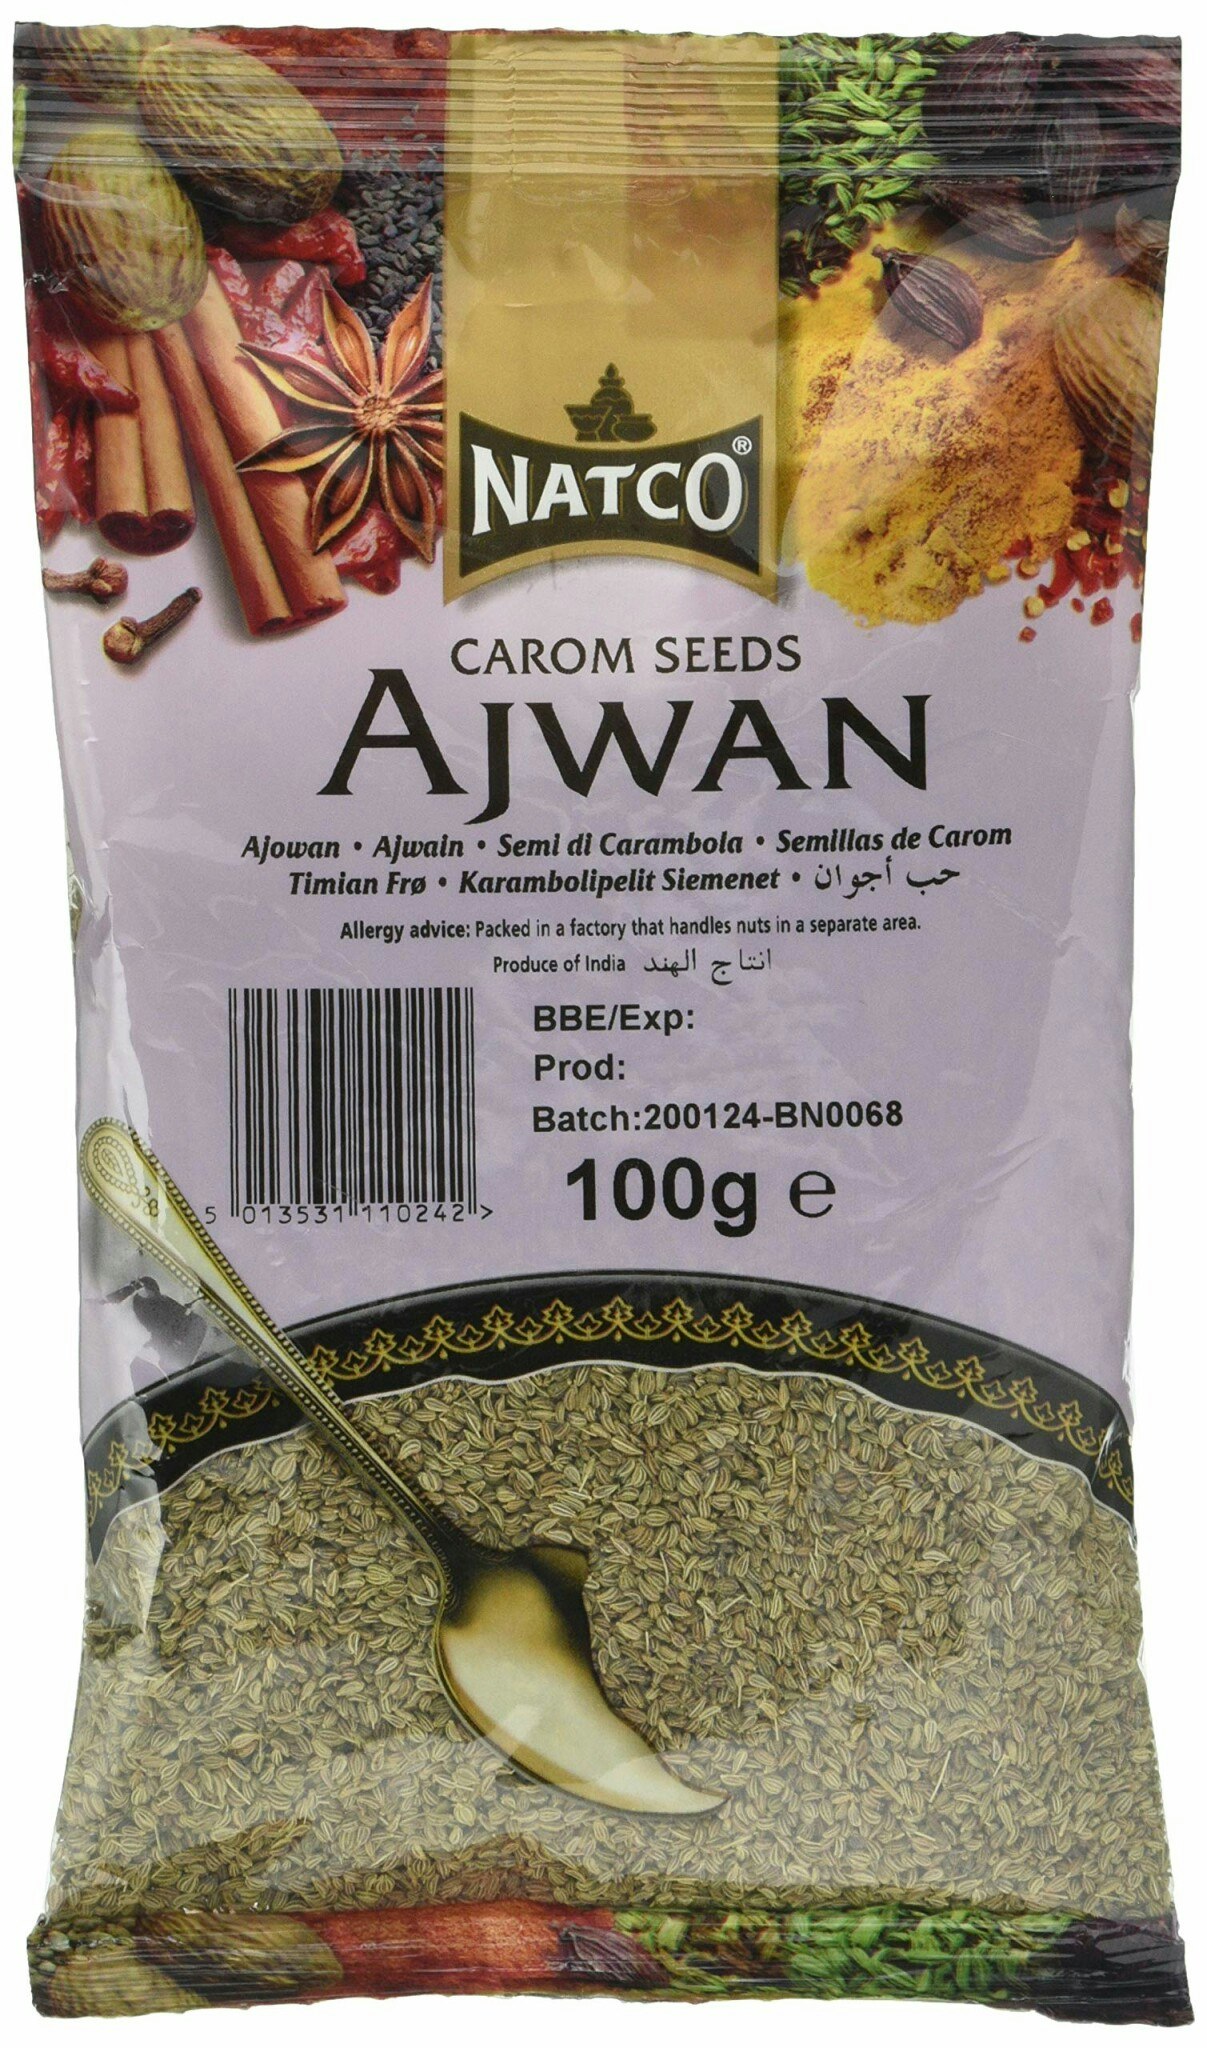 Ajwan (Carom) Seeds (Natco) 100g